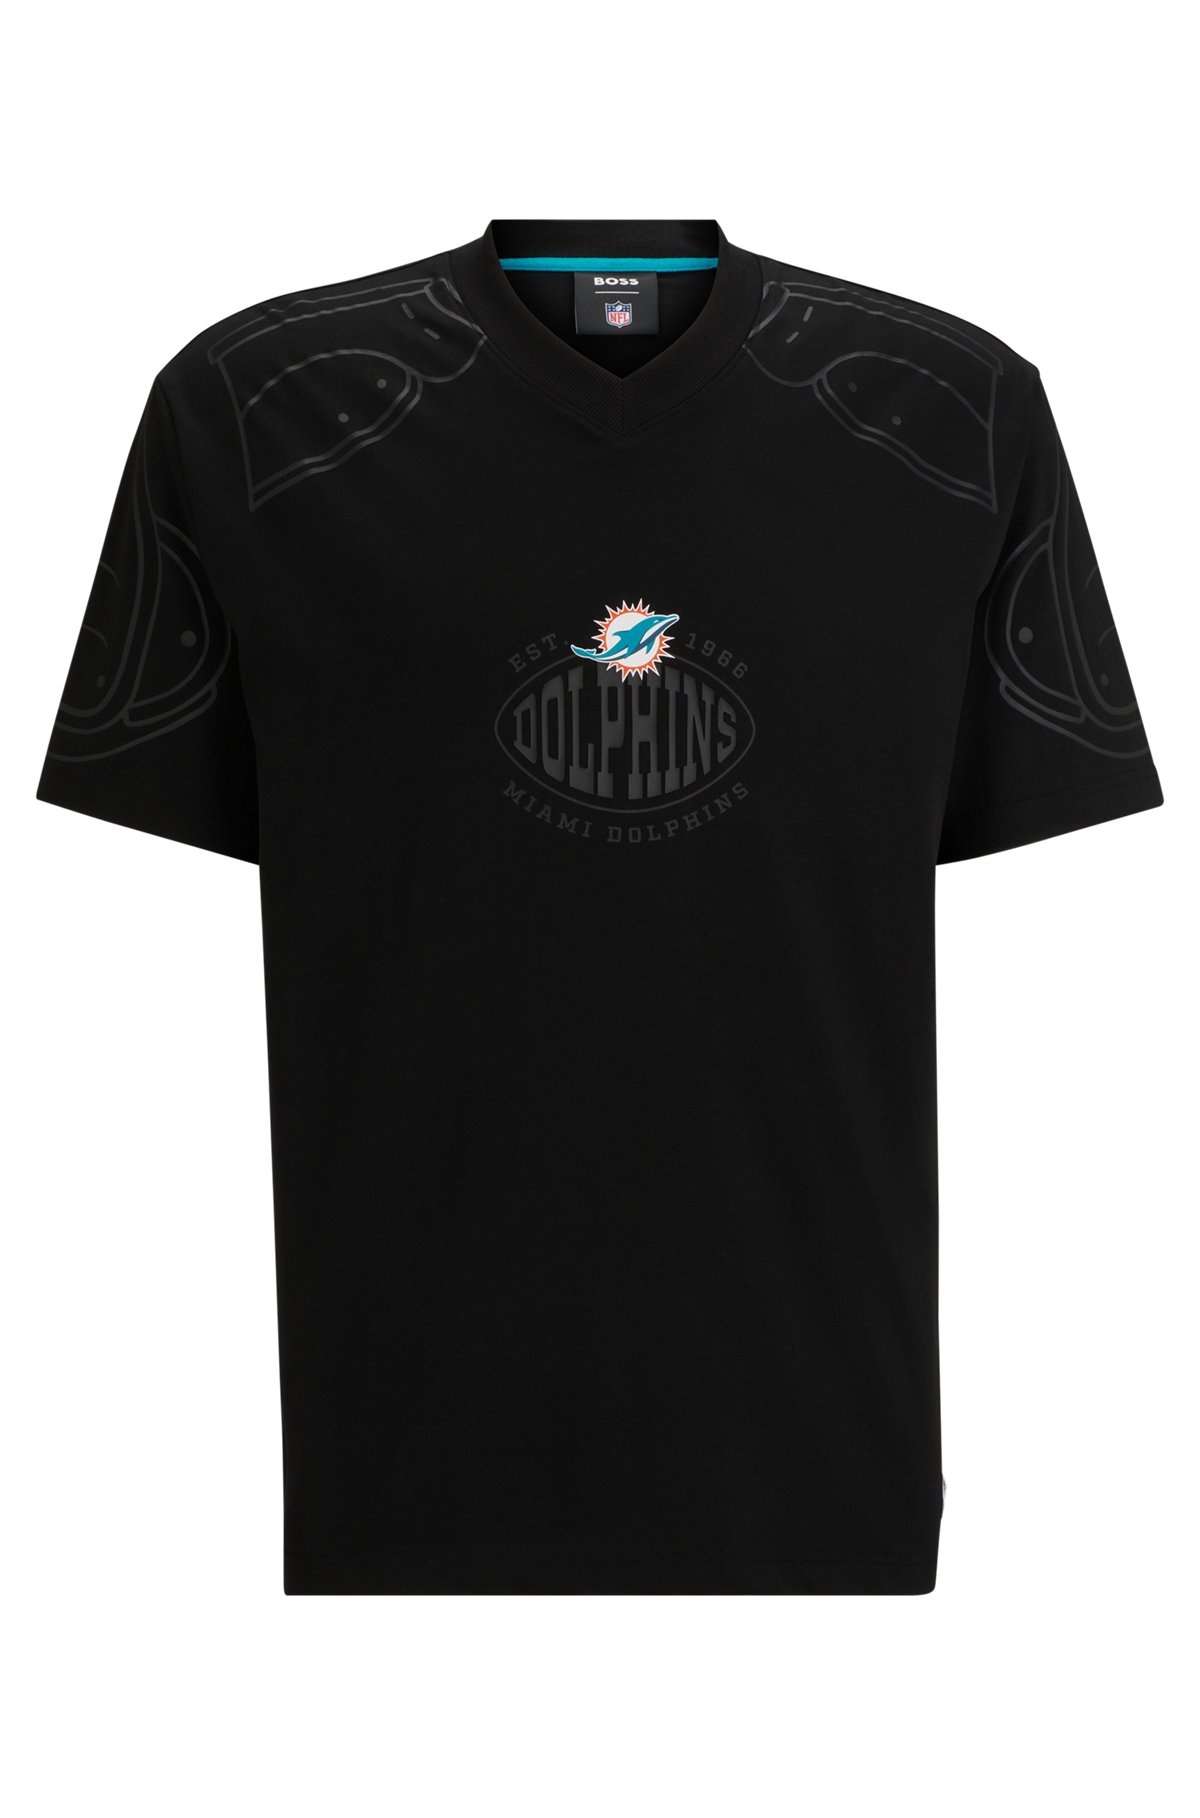 T-shirt Oversized Fit BOSS x NFL avec logo du partenariat, Dolphins